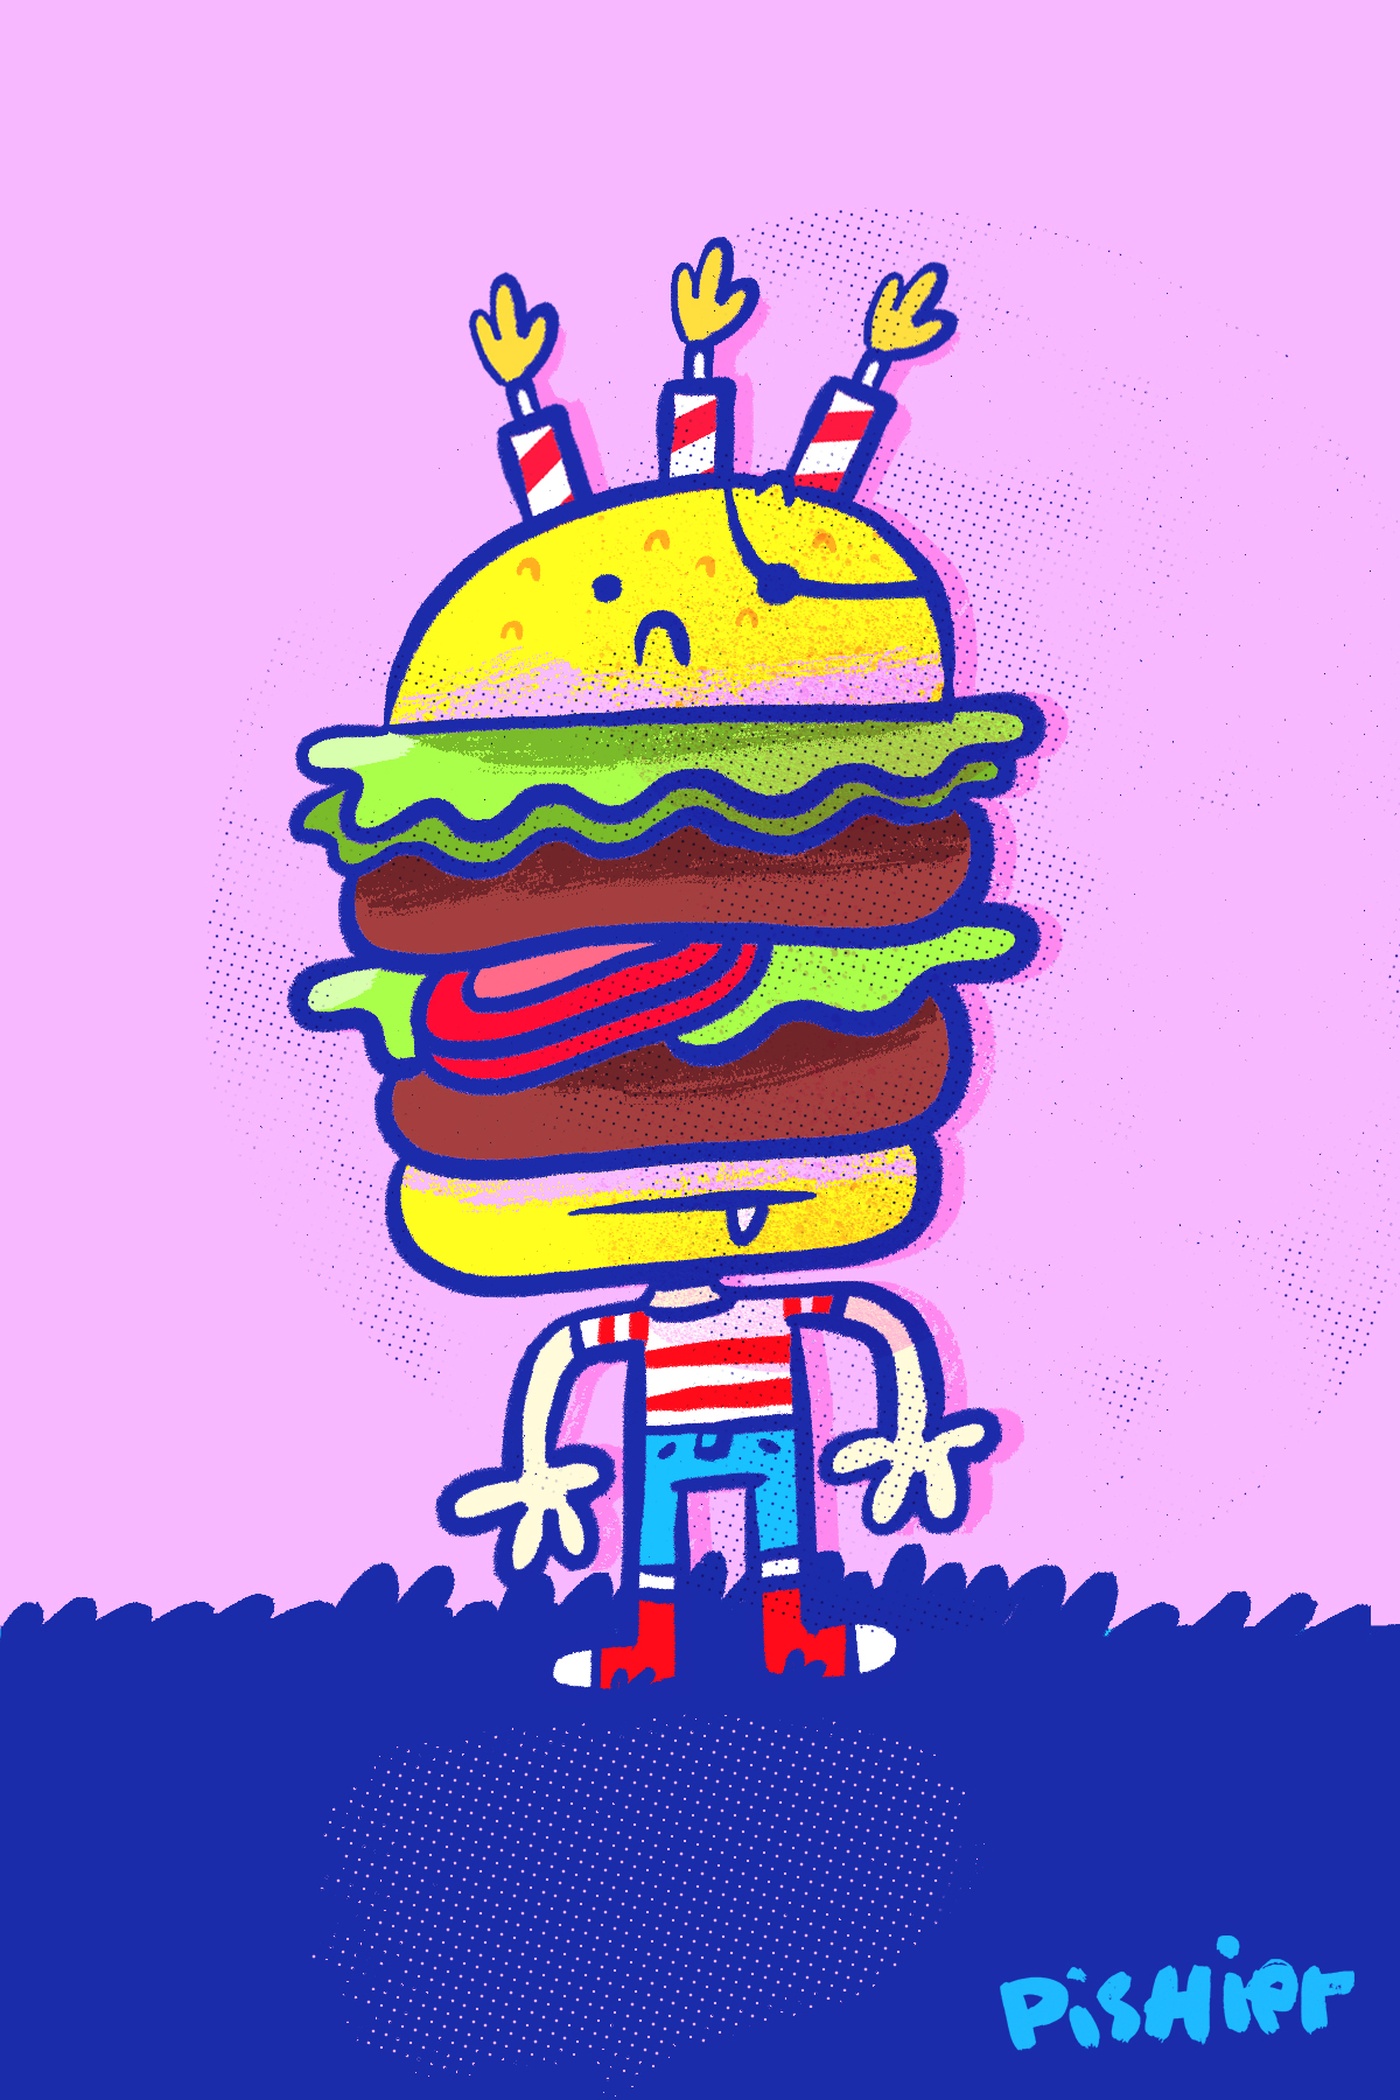 PisHier - Mr Burger